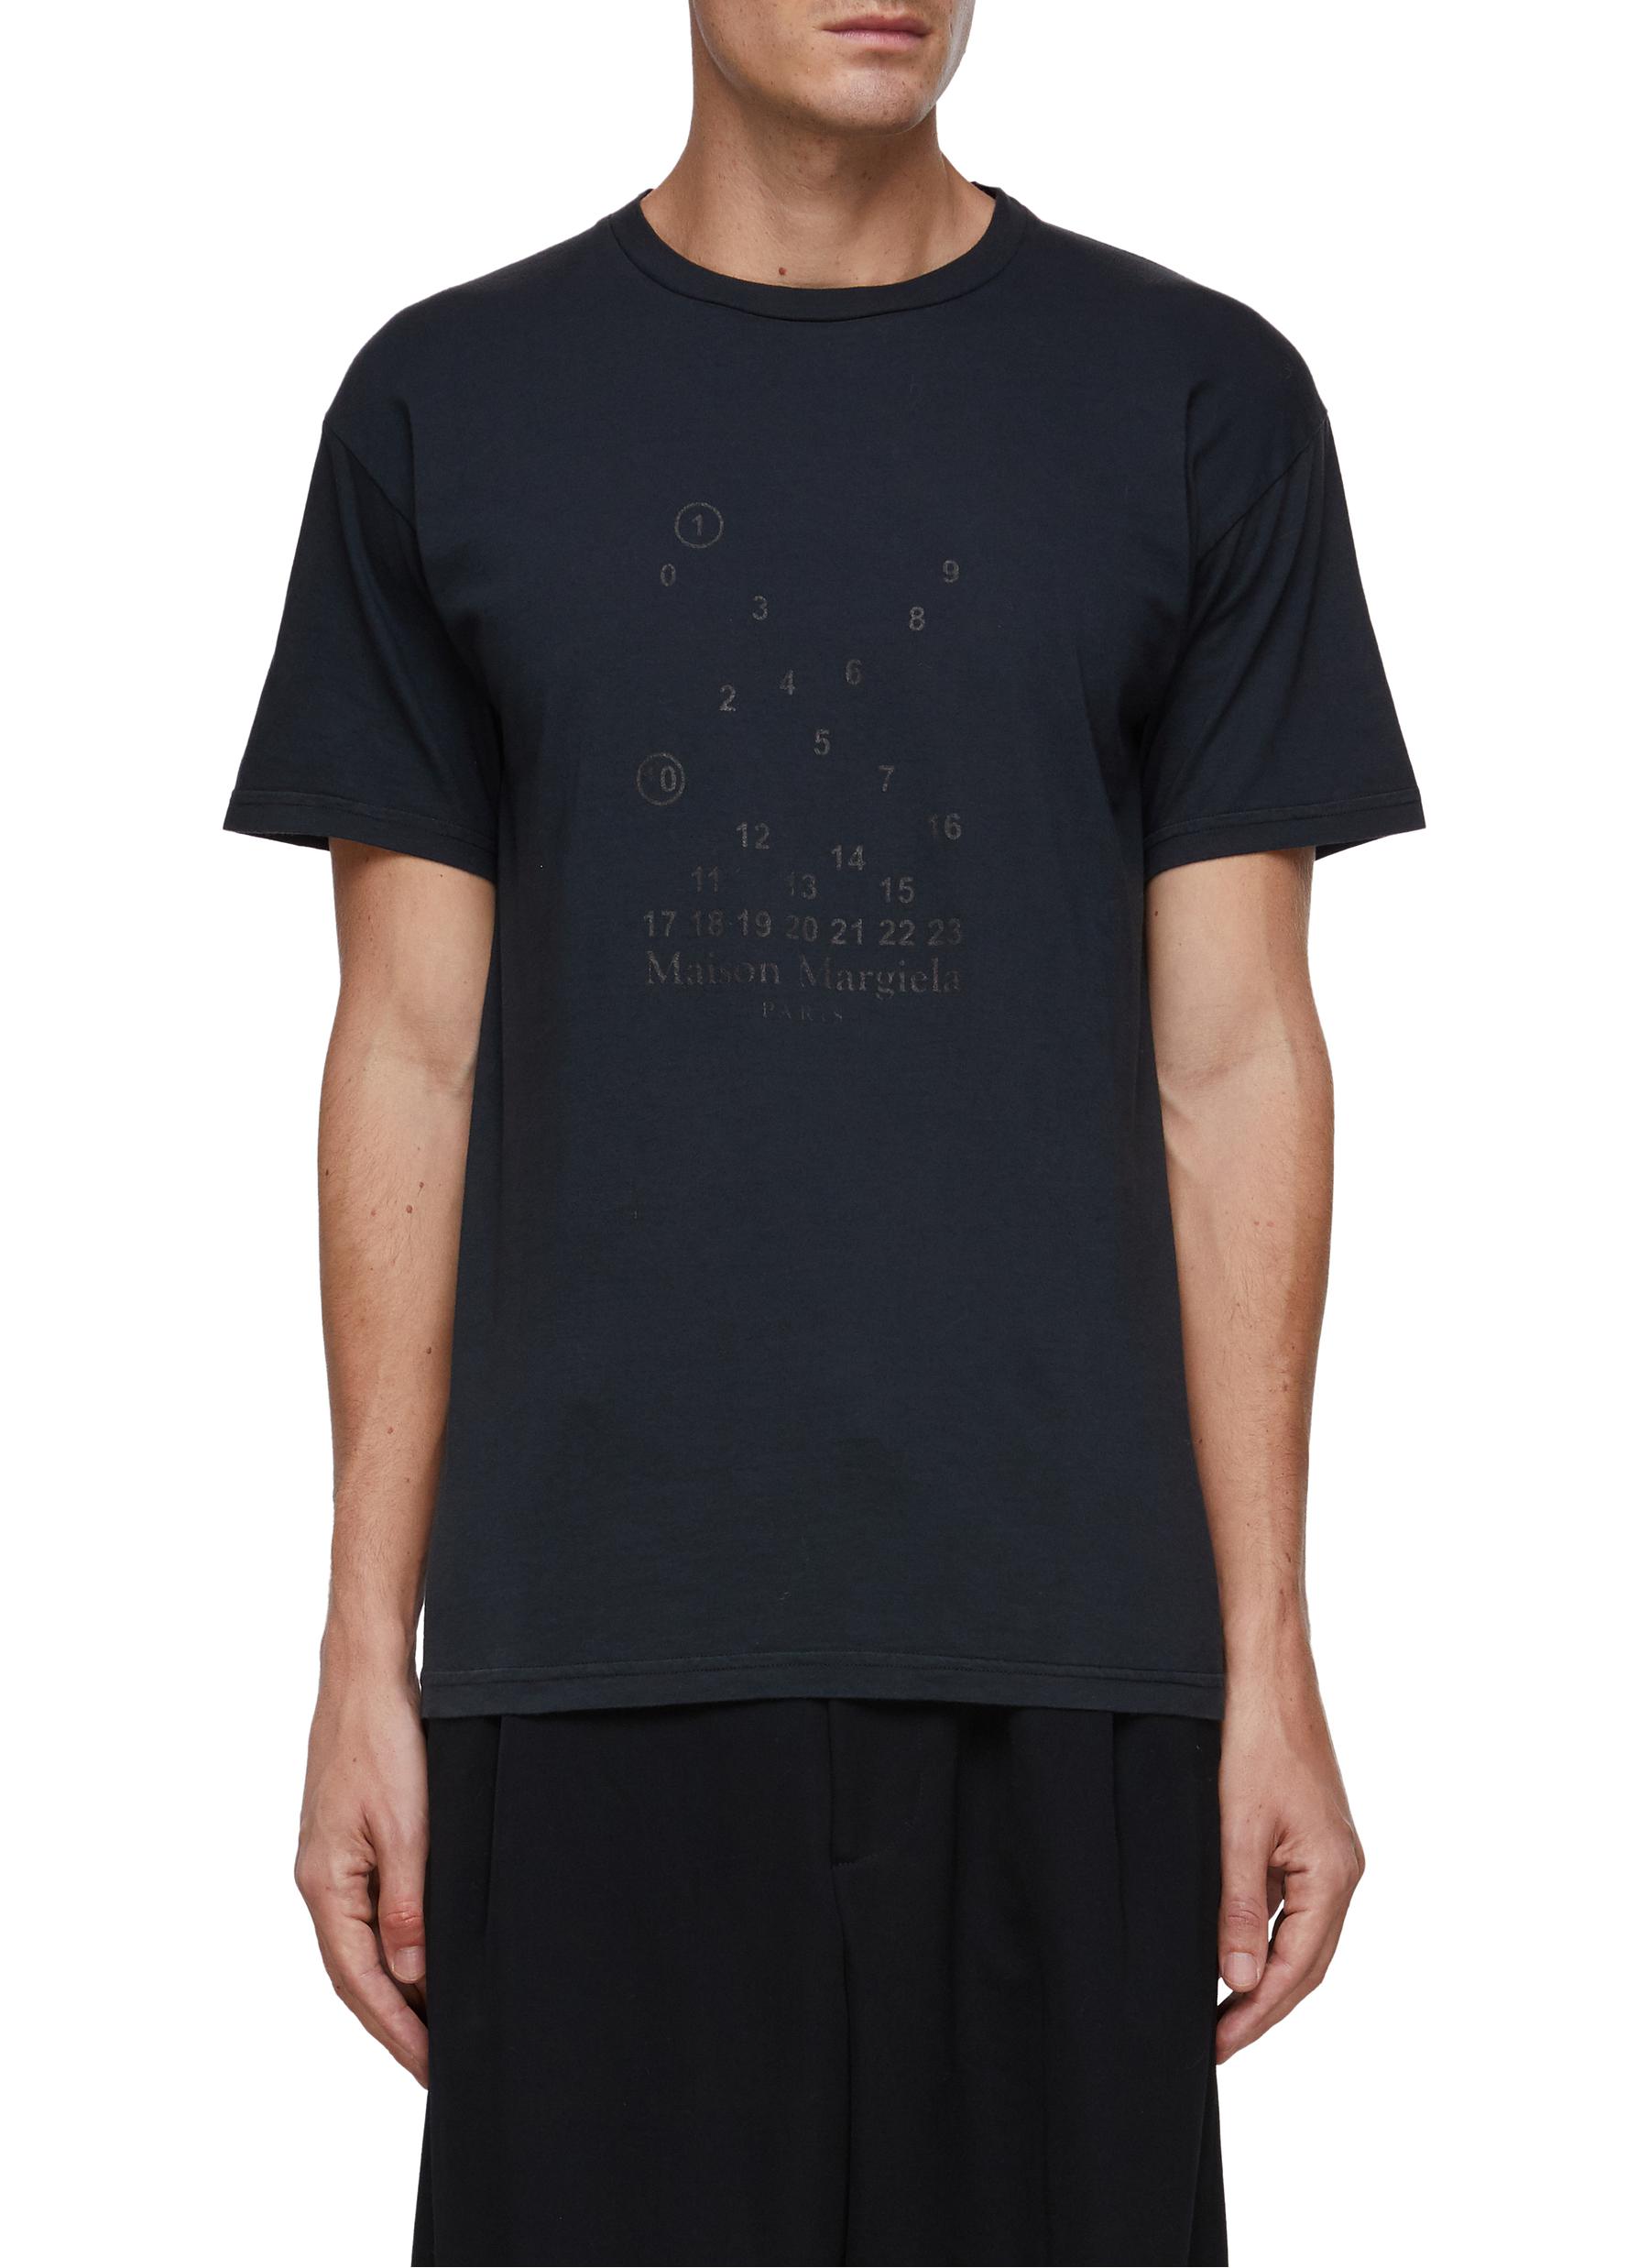 【16 SS】 Mood Print TEE／MAISON MARGIELA Tシャツ/カットソー(半袖/袖なし) 販売元直販